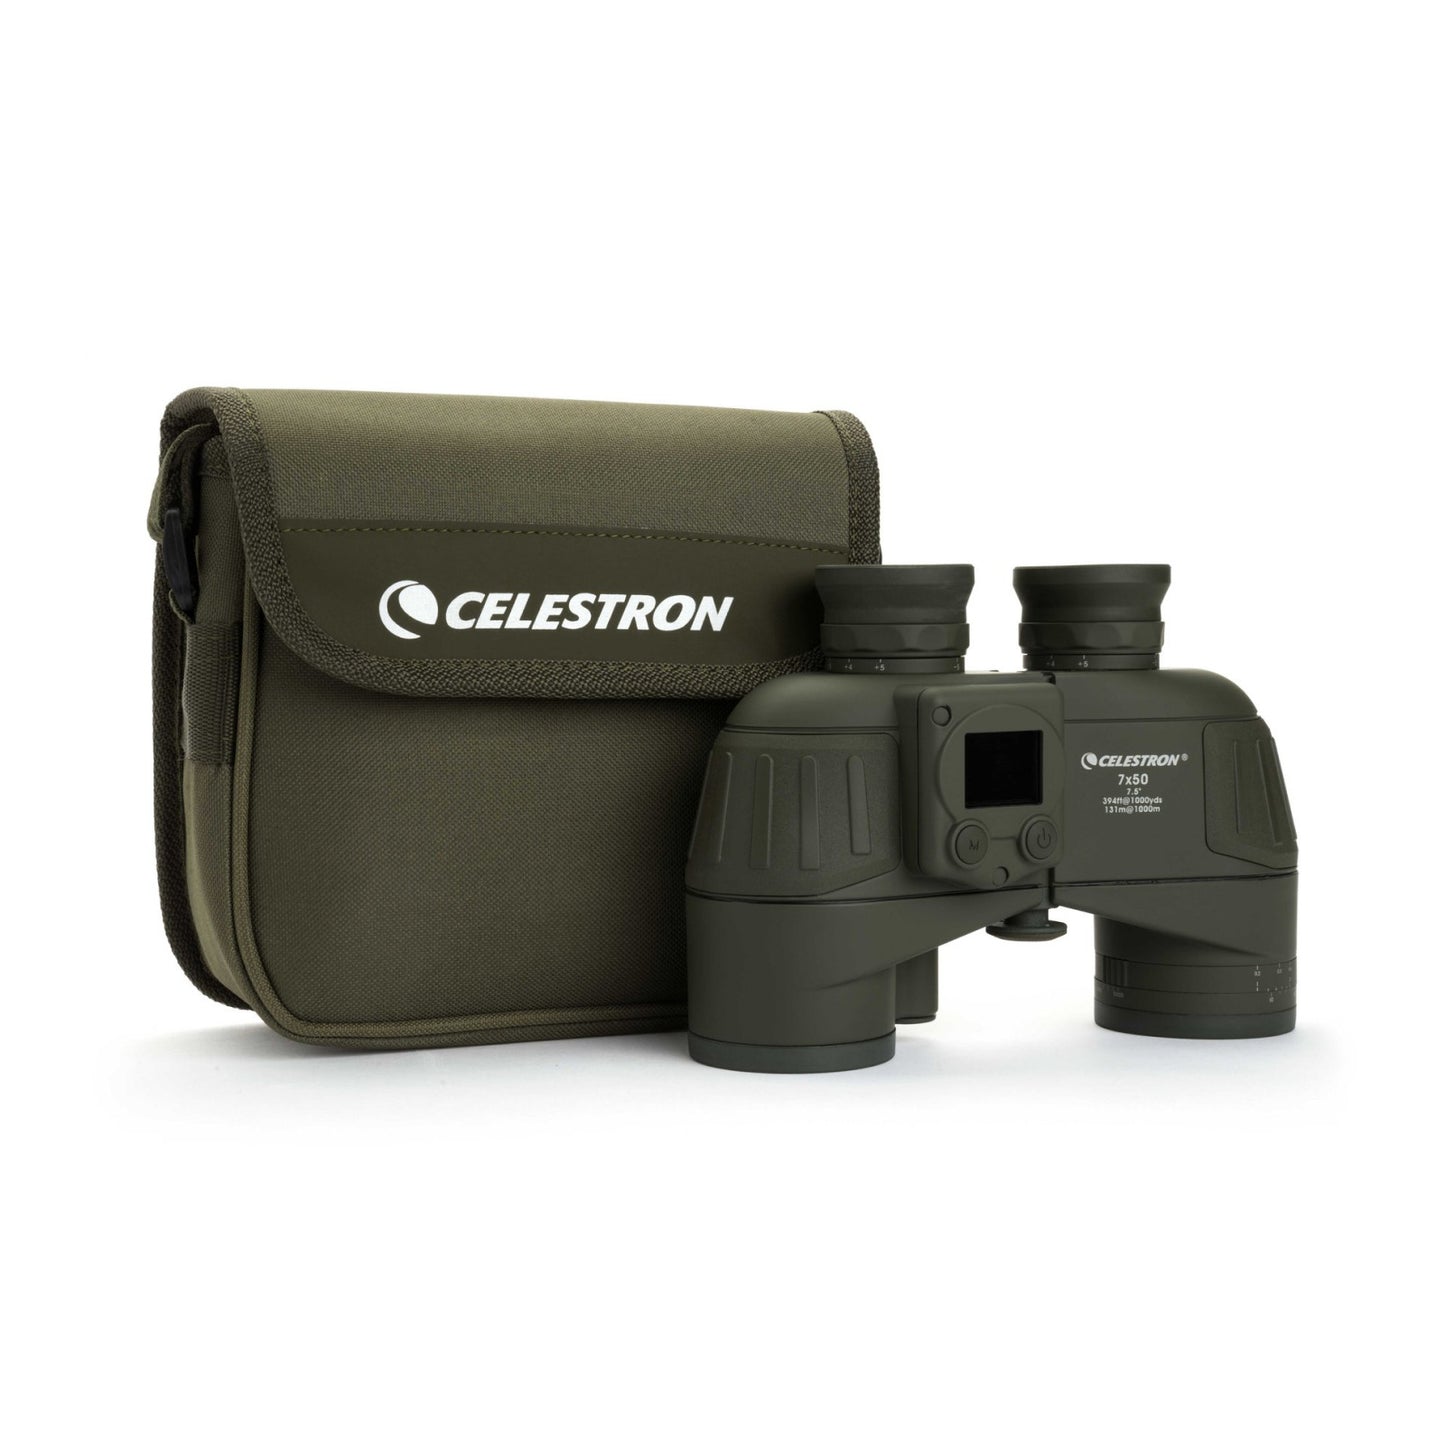 Celestron Binoculars Cavalry 7X50 mm